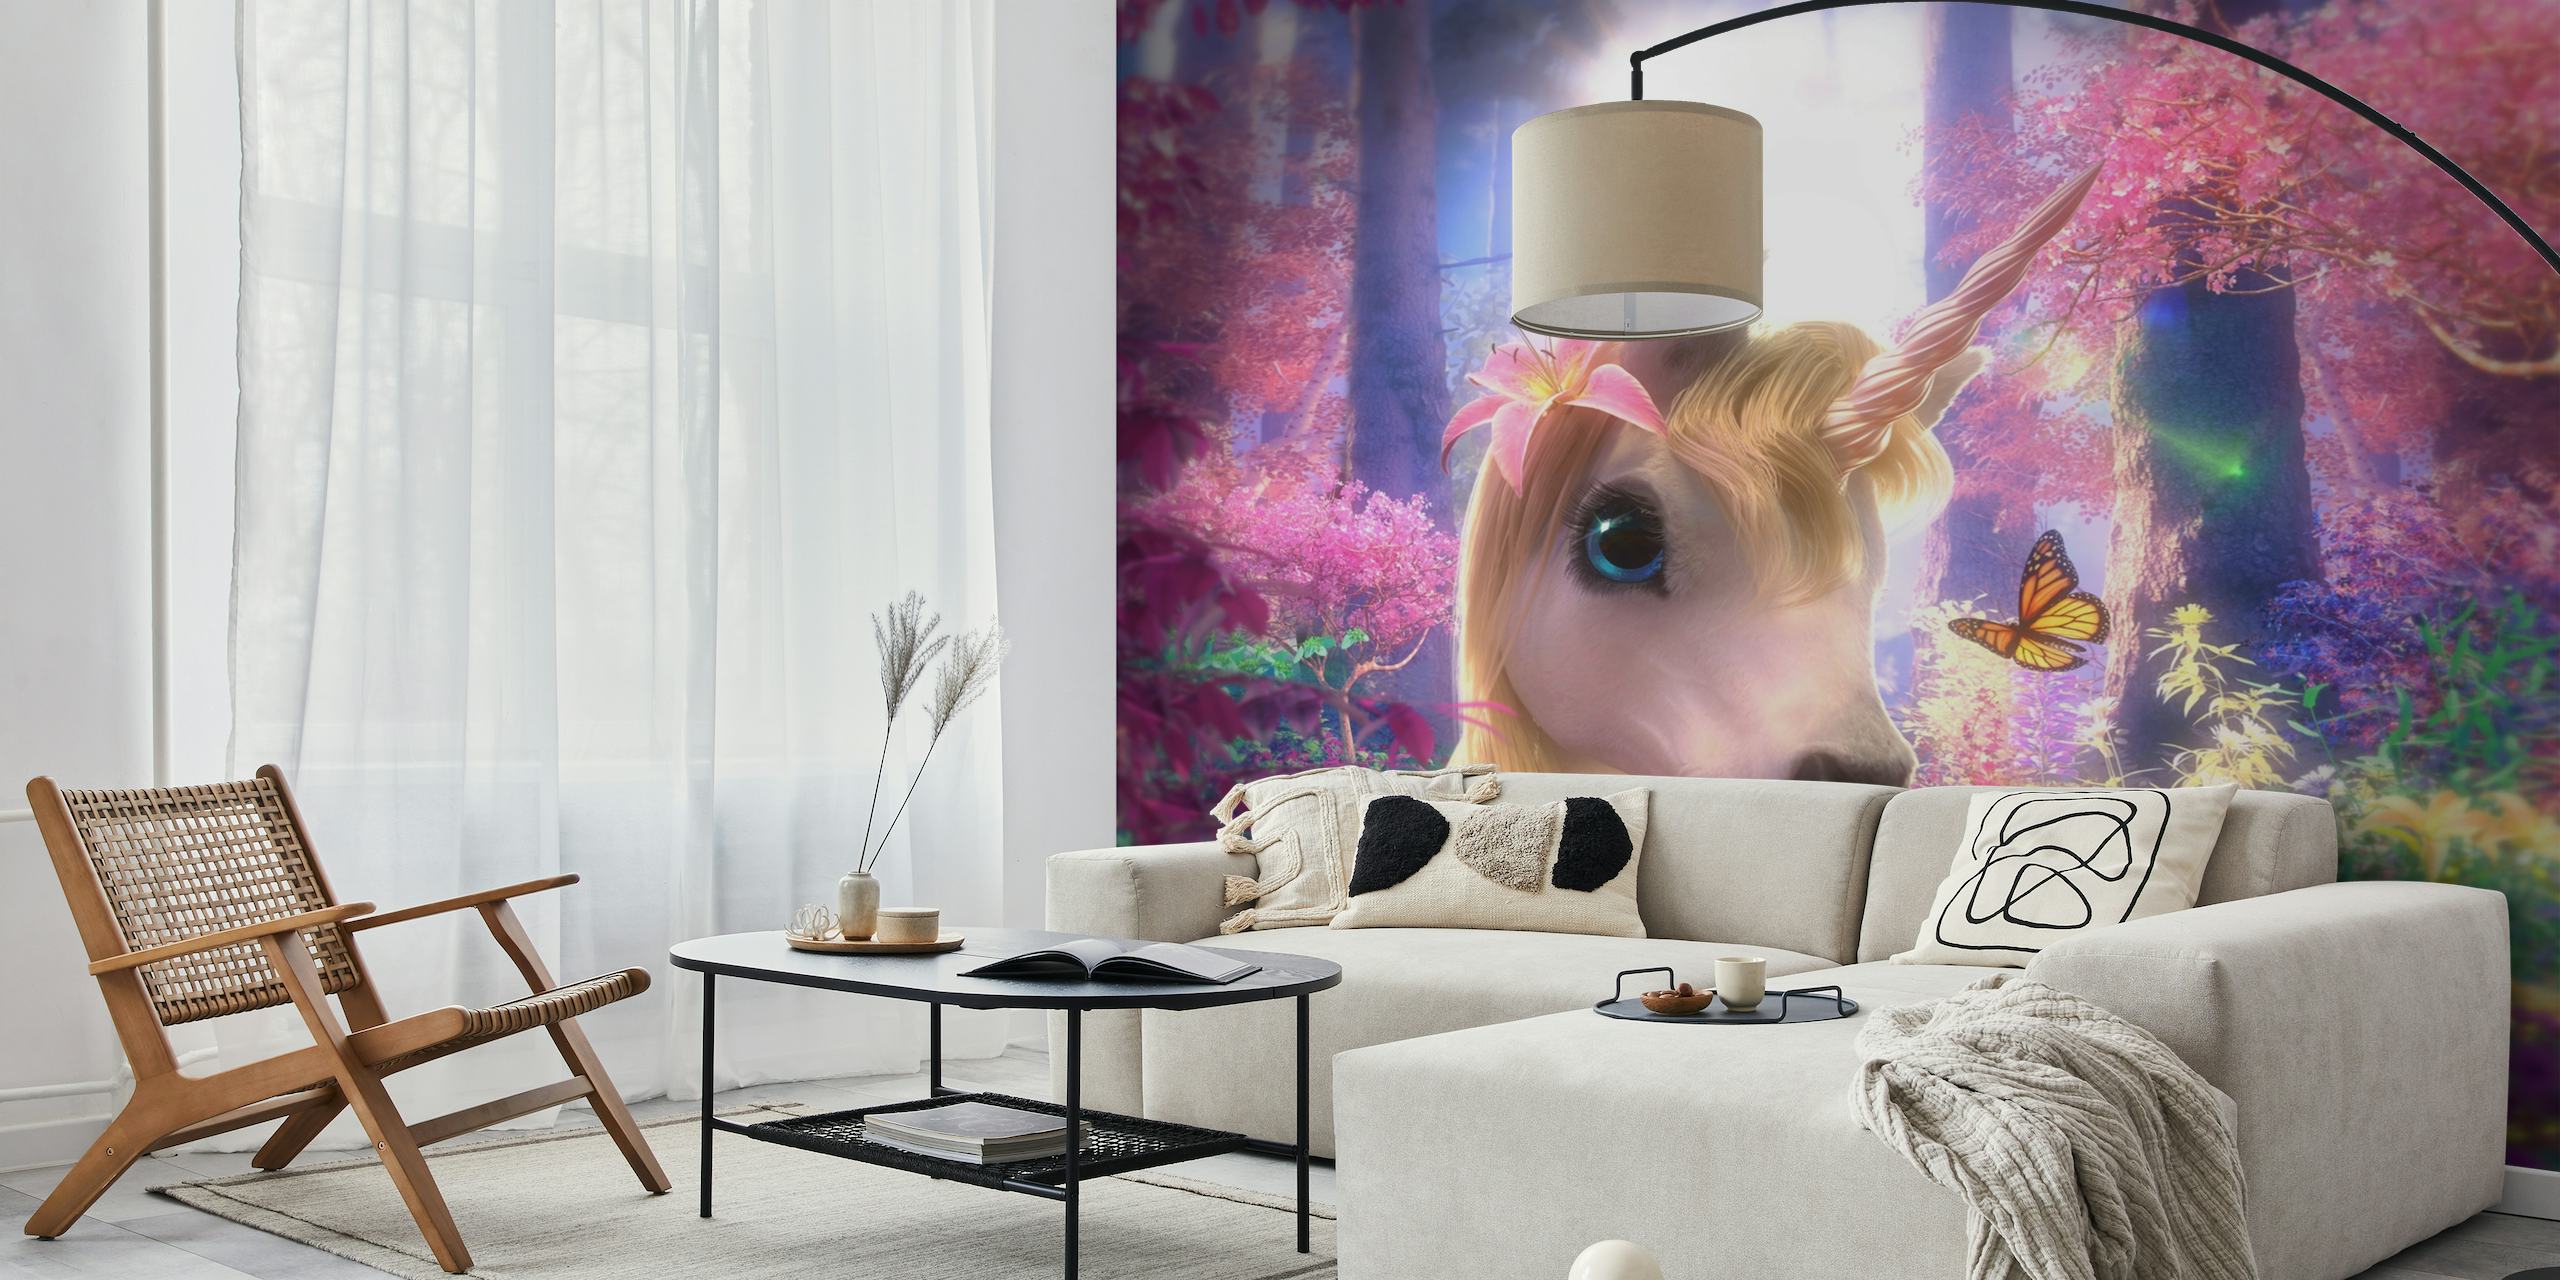 Sparkle the Unicorn wallpaper